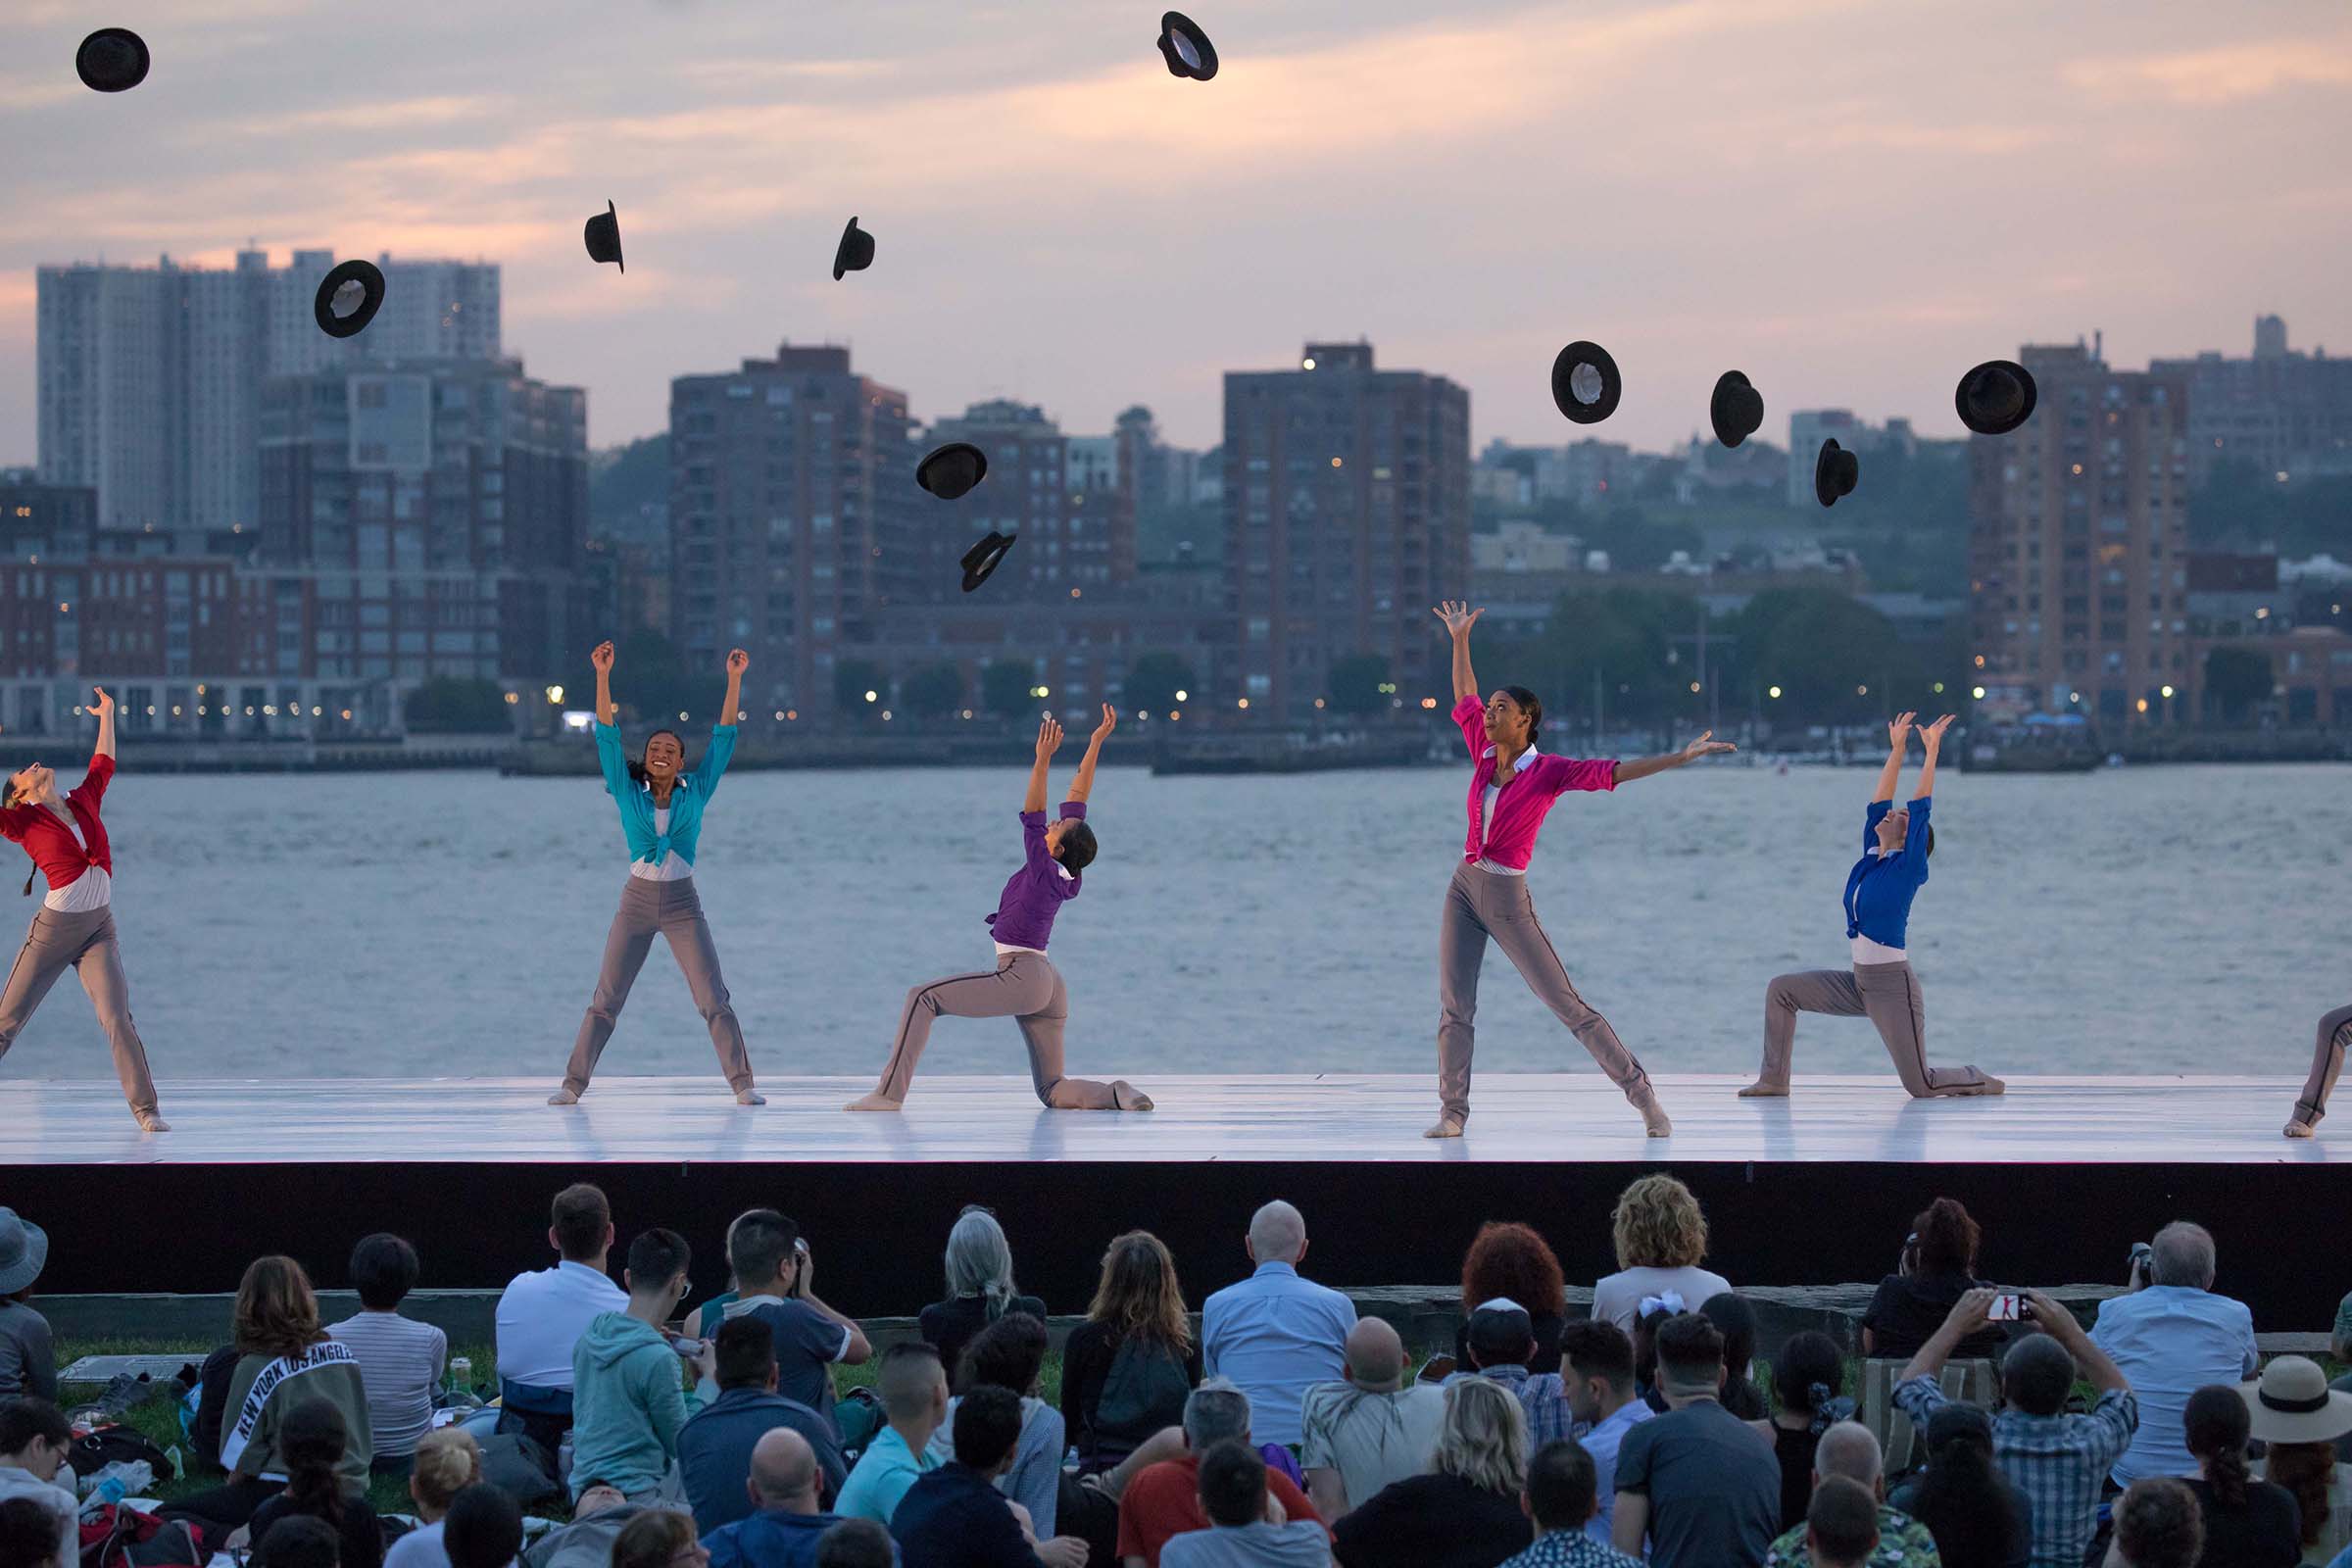 Ballet Hispanico performs at the Hudson River Dance Festival at Pier 63